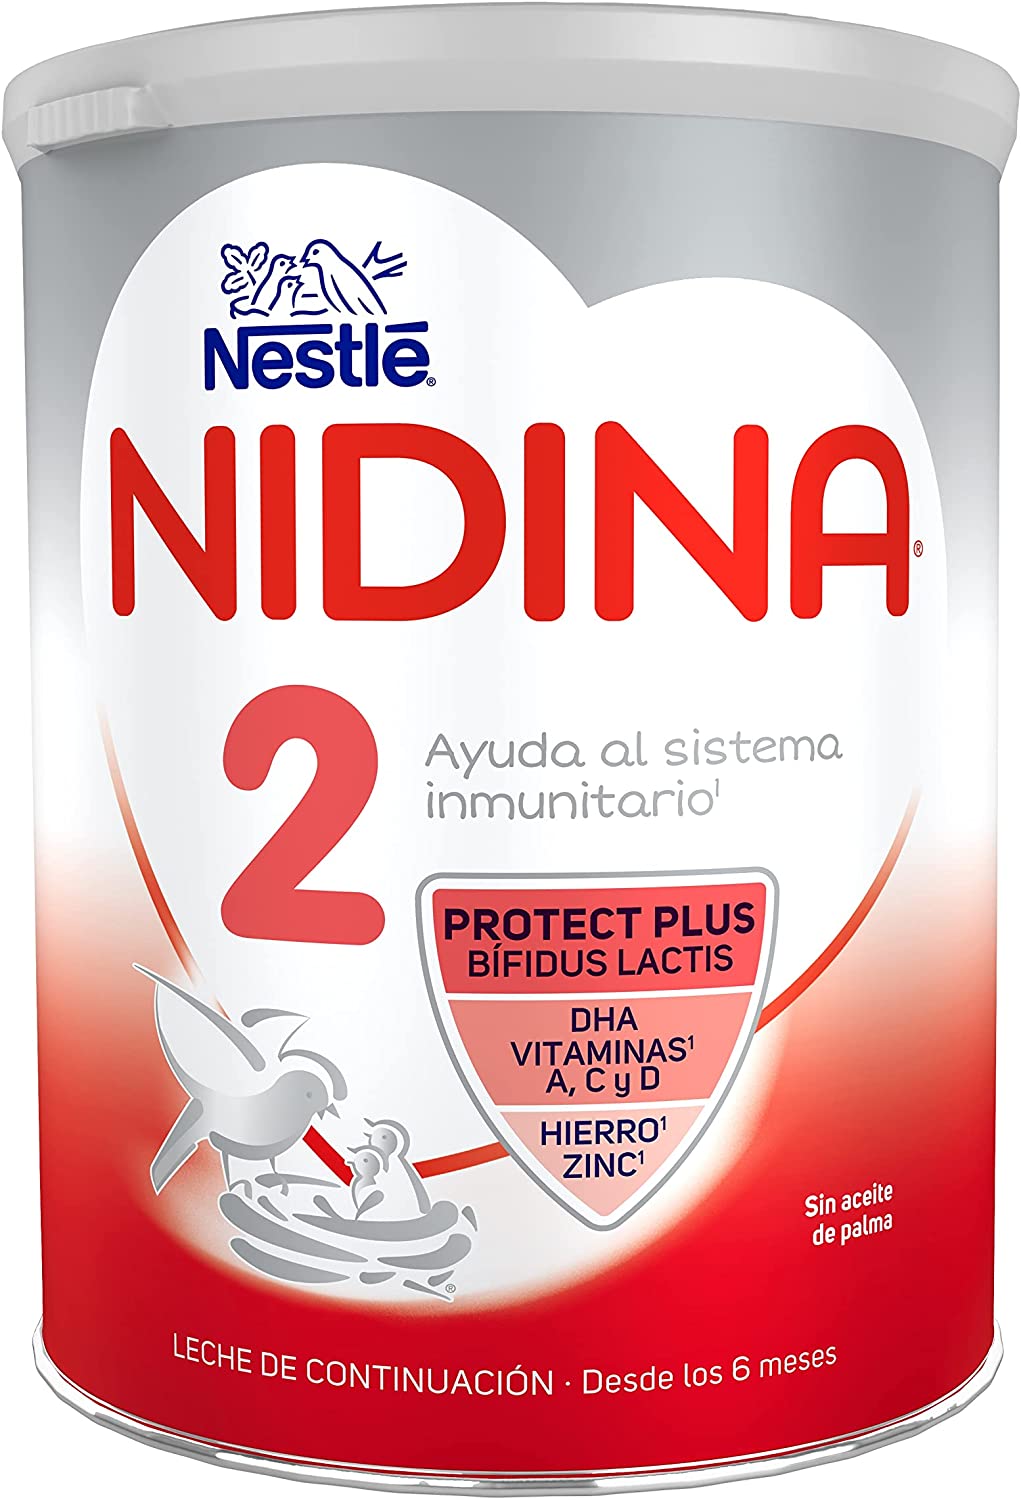 Online store selling milk below 2 Premium Nestle Nidina